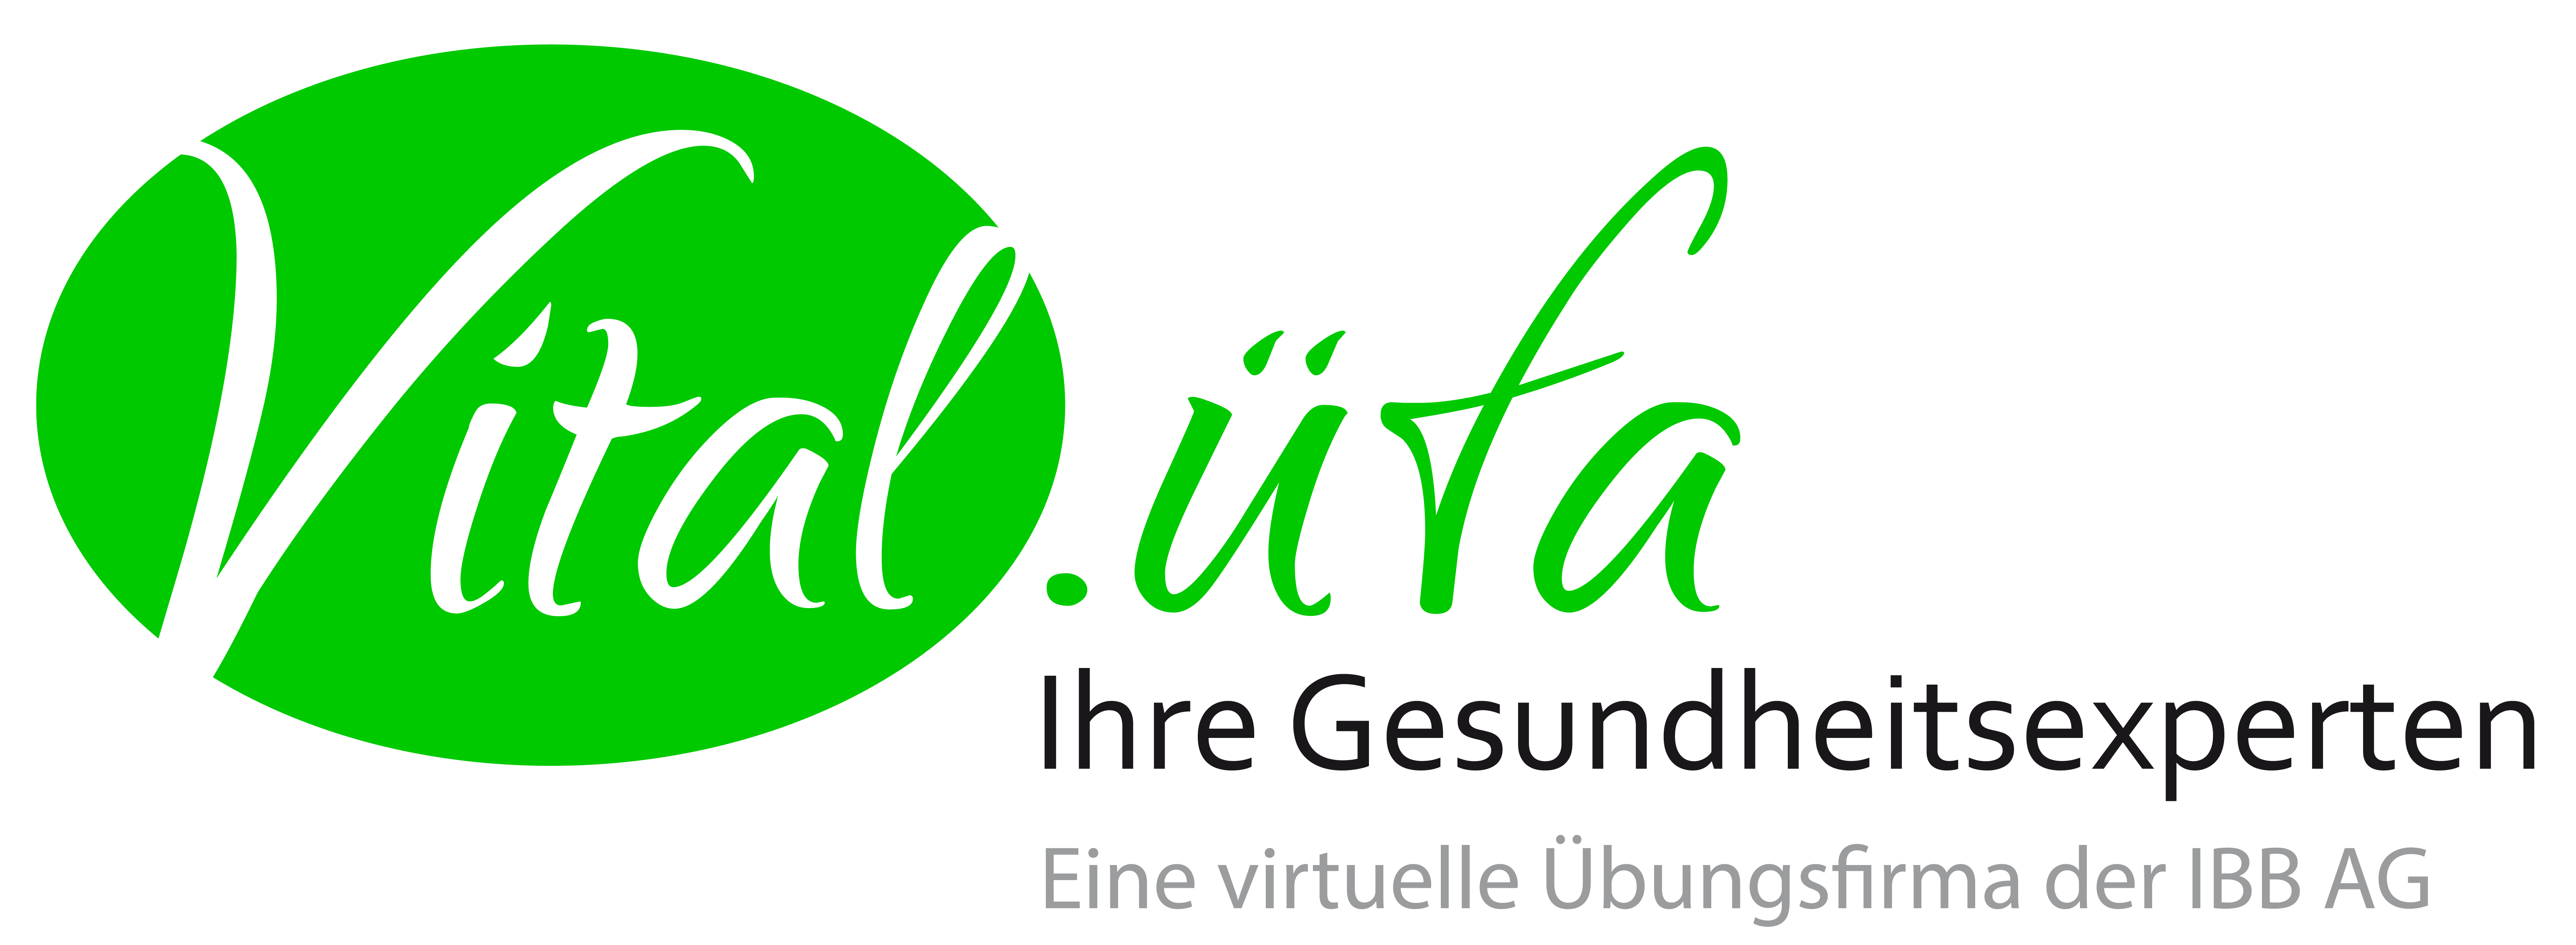 Logo der Vital.üfa GmbH